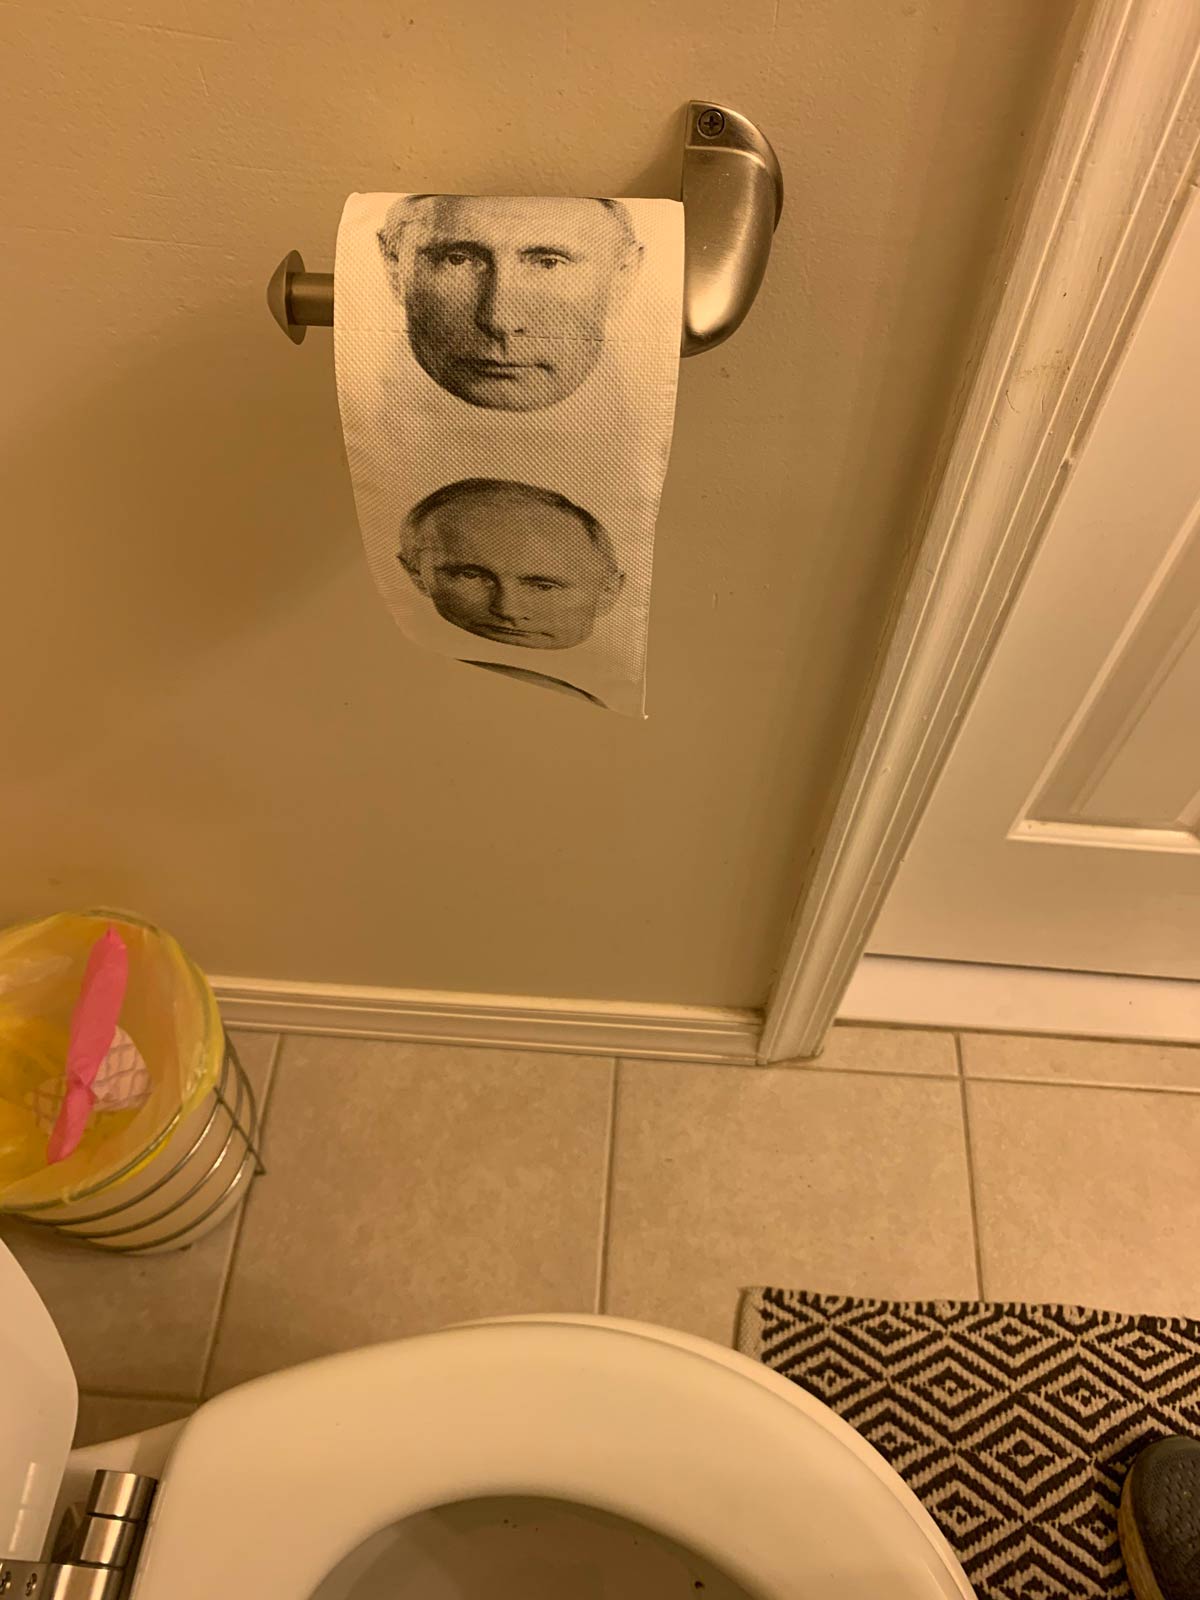 My parents have Putin toilet paper